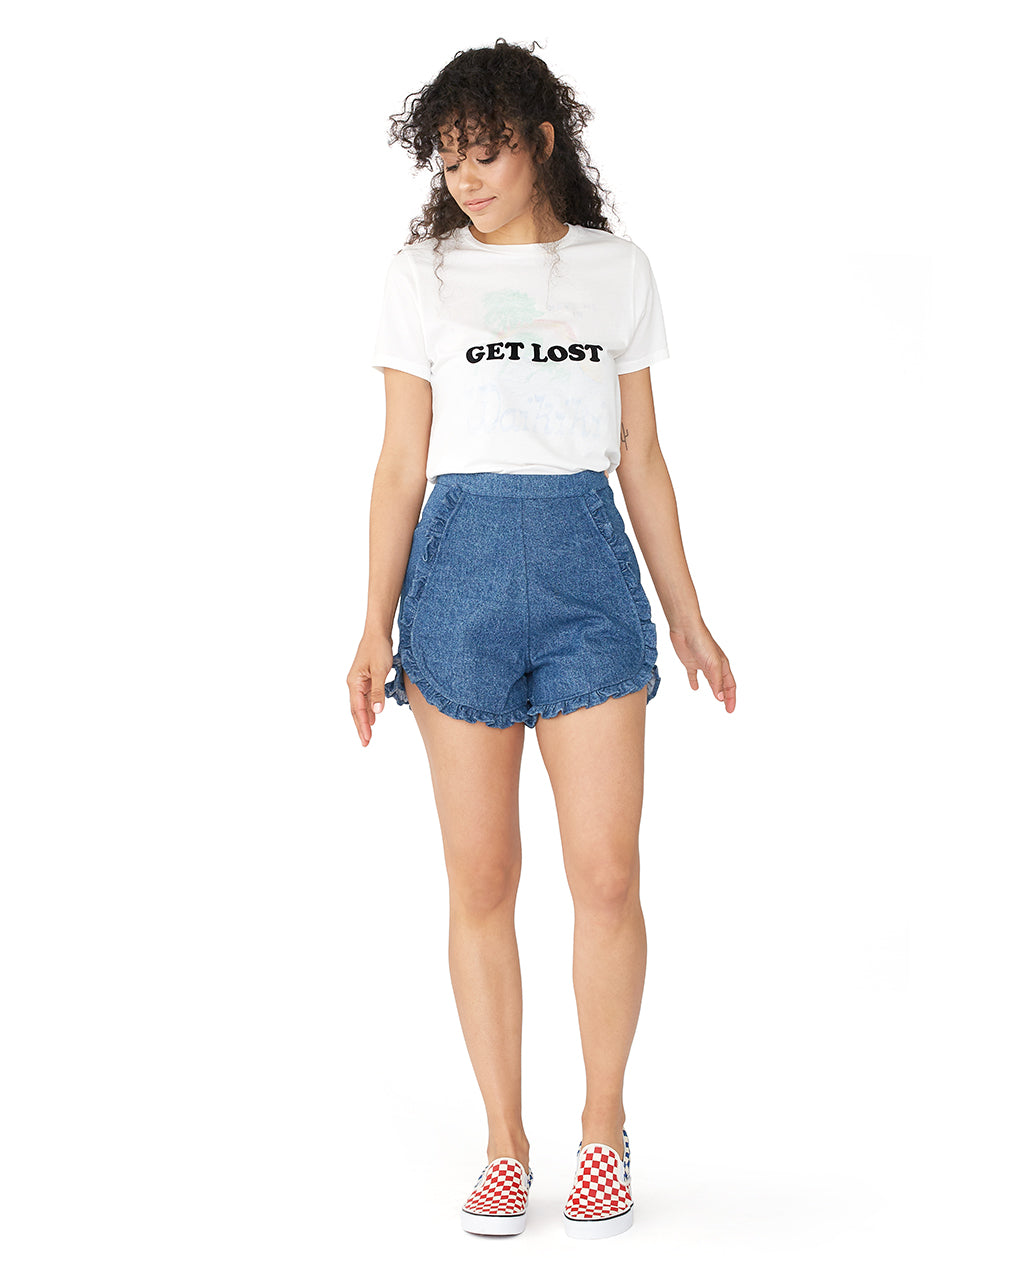 Floweret Shorts - Ultramarine by samantha pleet - shorts - ban.do